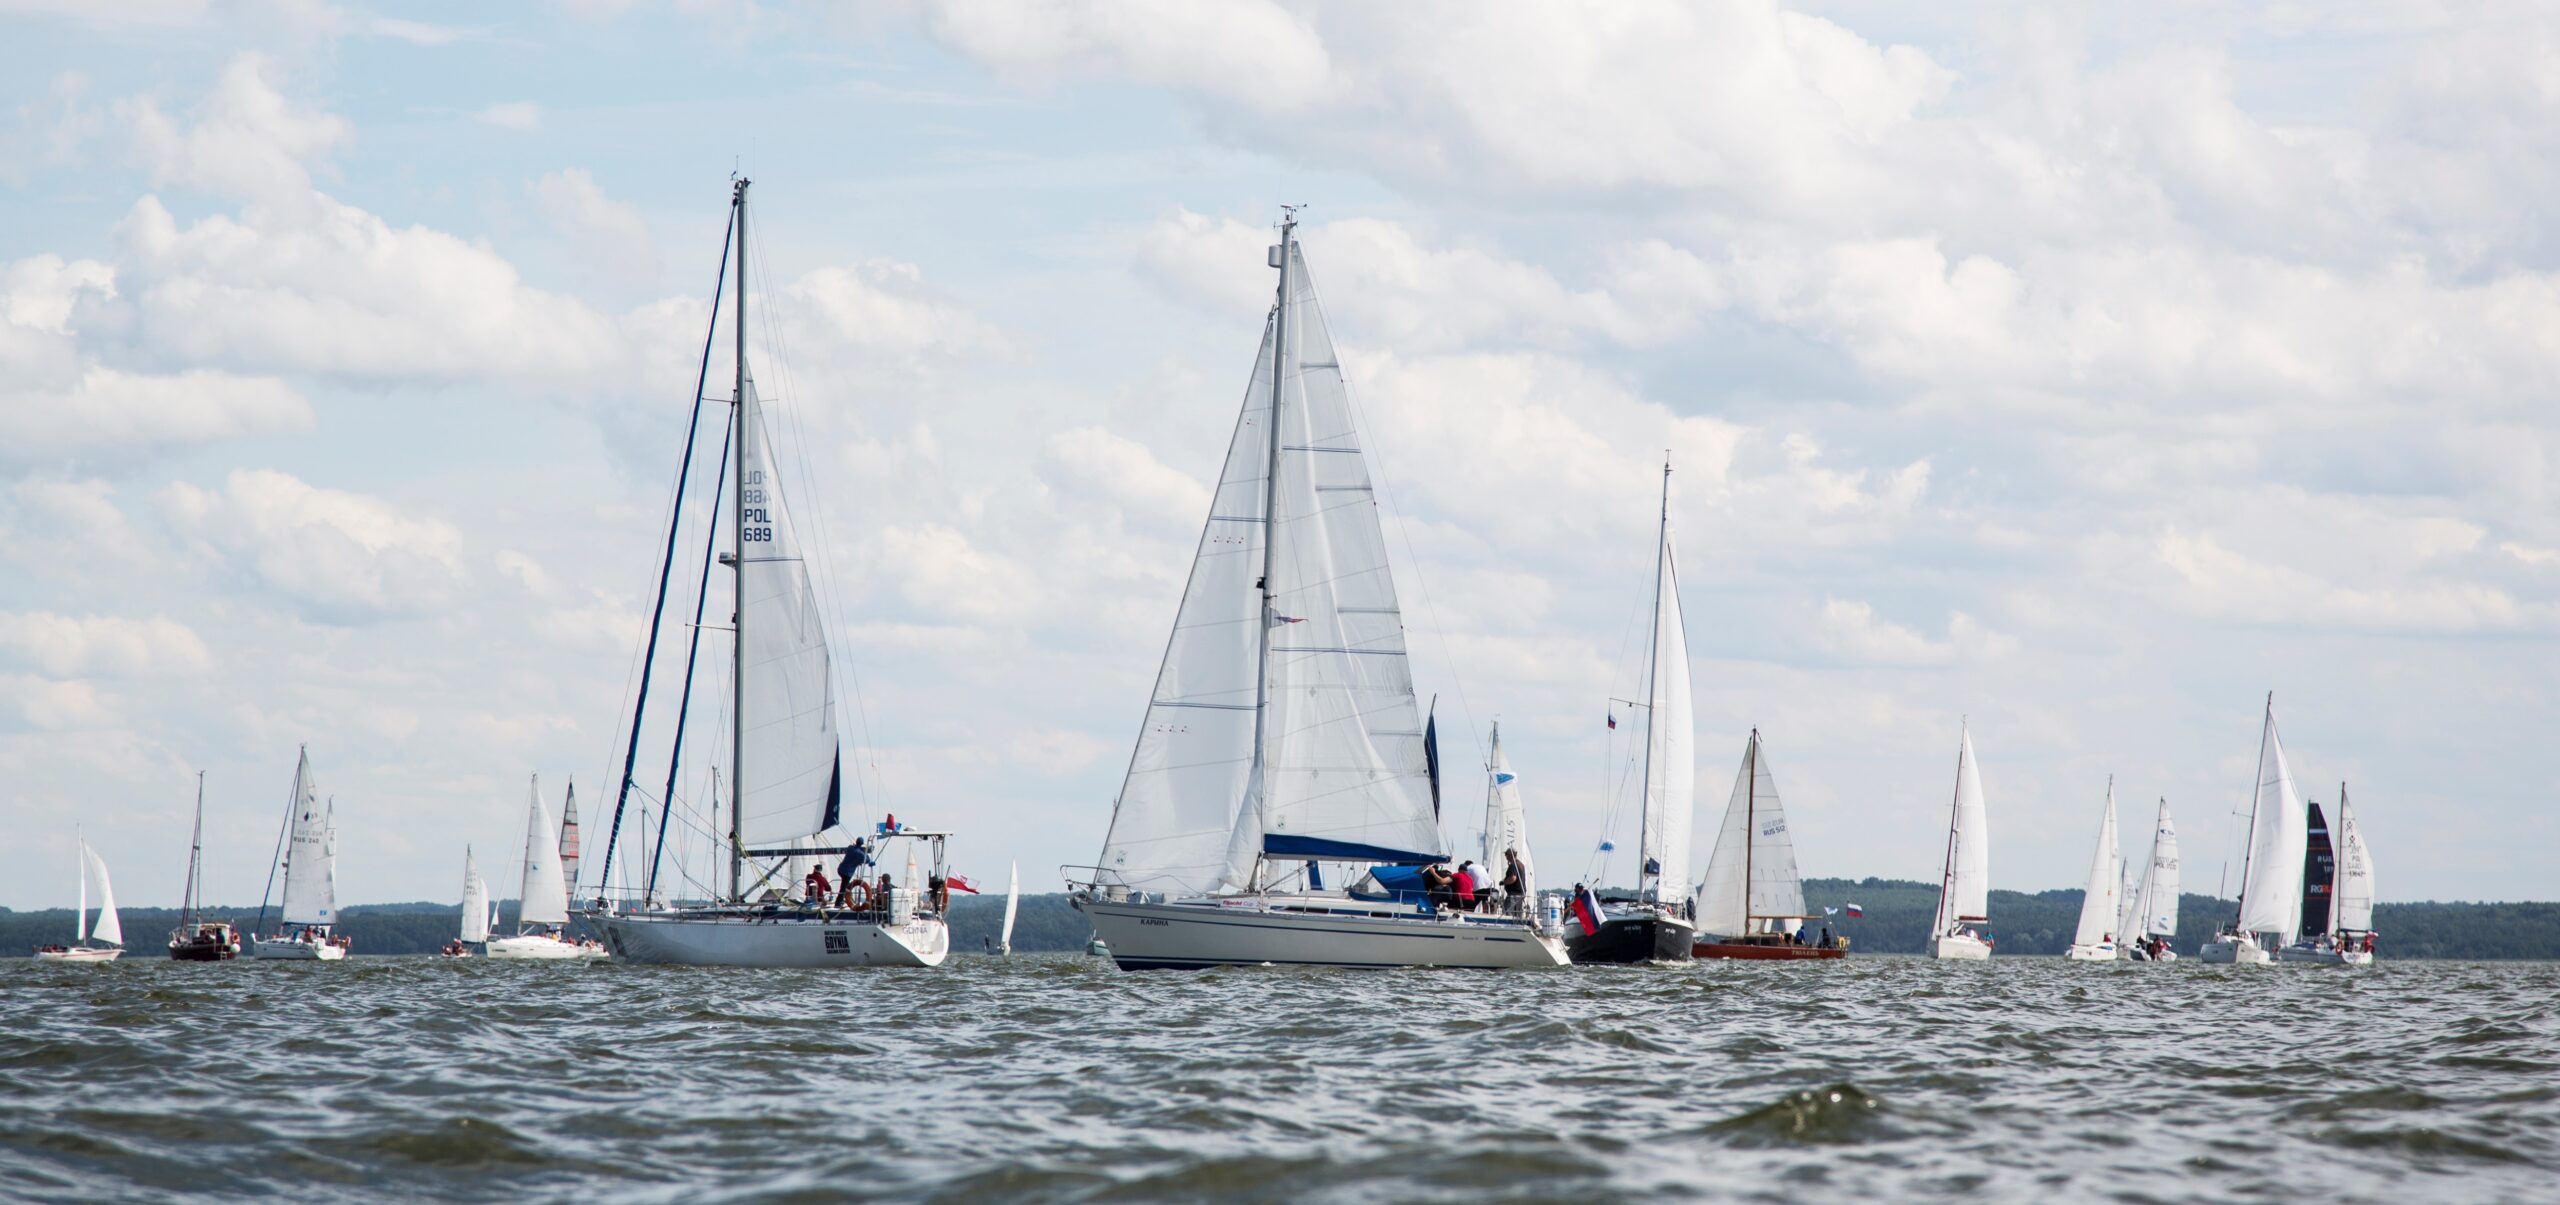 White sails on the Vistula Lagoon with the Marshal’s Cup Regatta